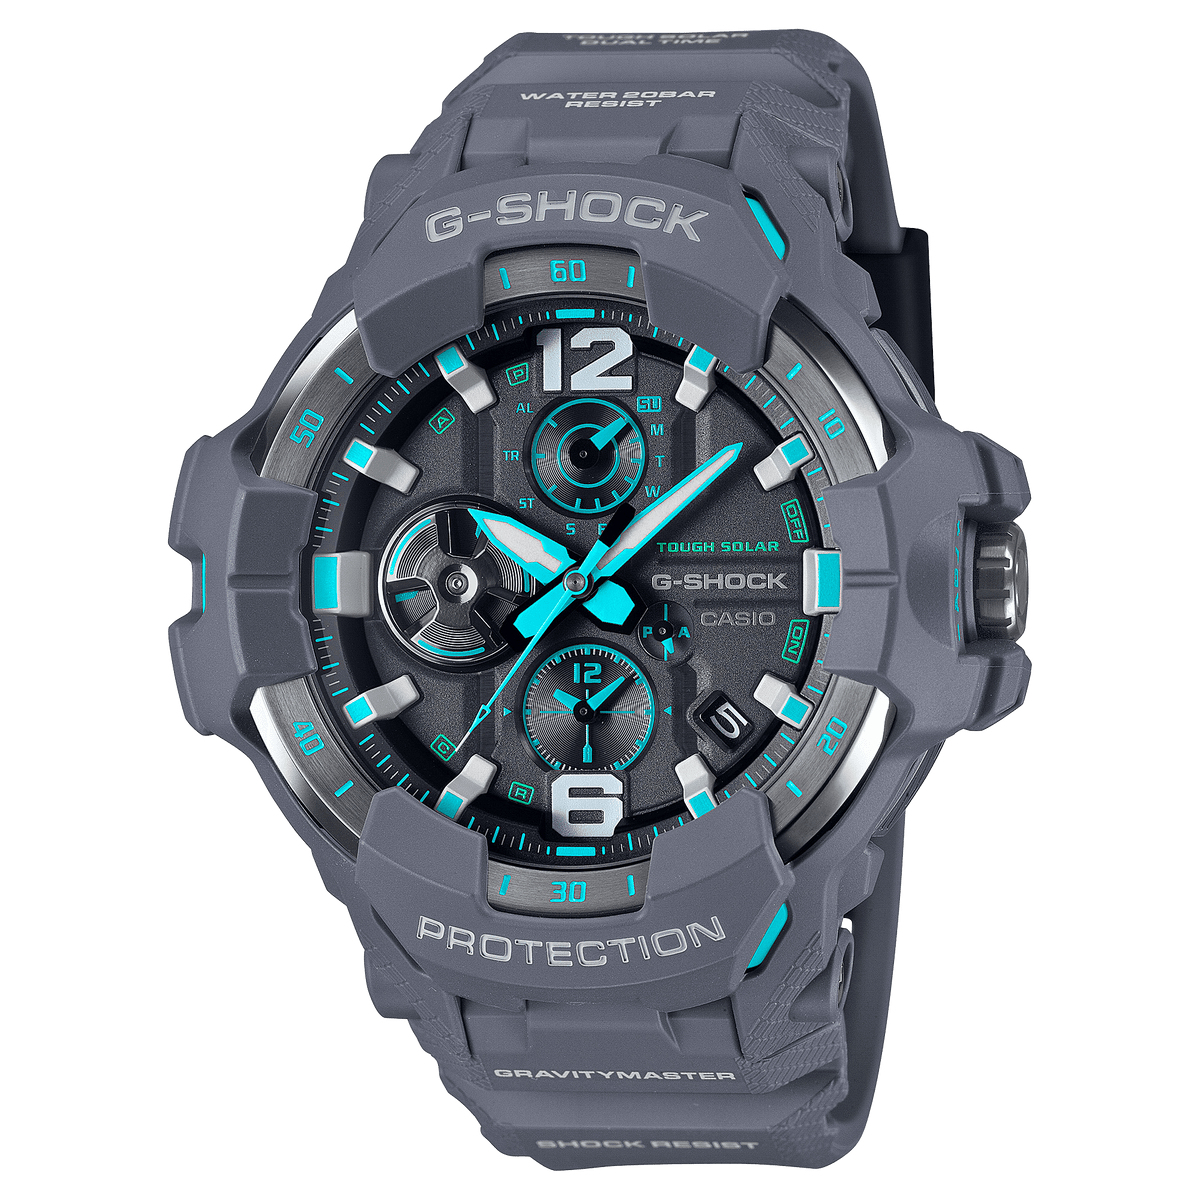 G-Shock Master of G GRAVITYMASTER Gray-Blue Men's Watch GRB300-8A2